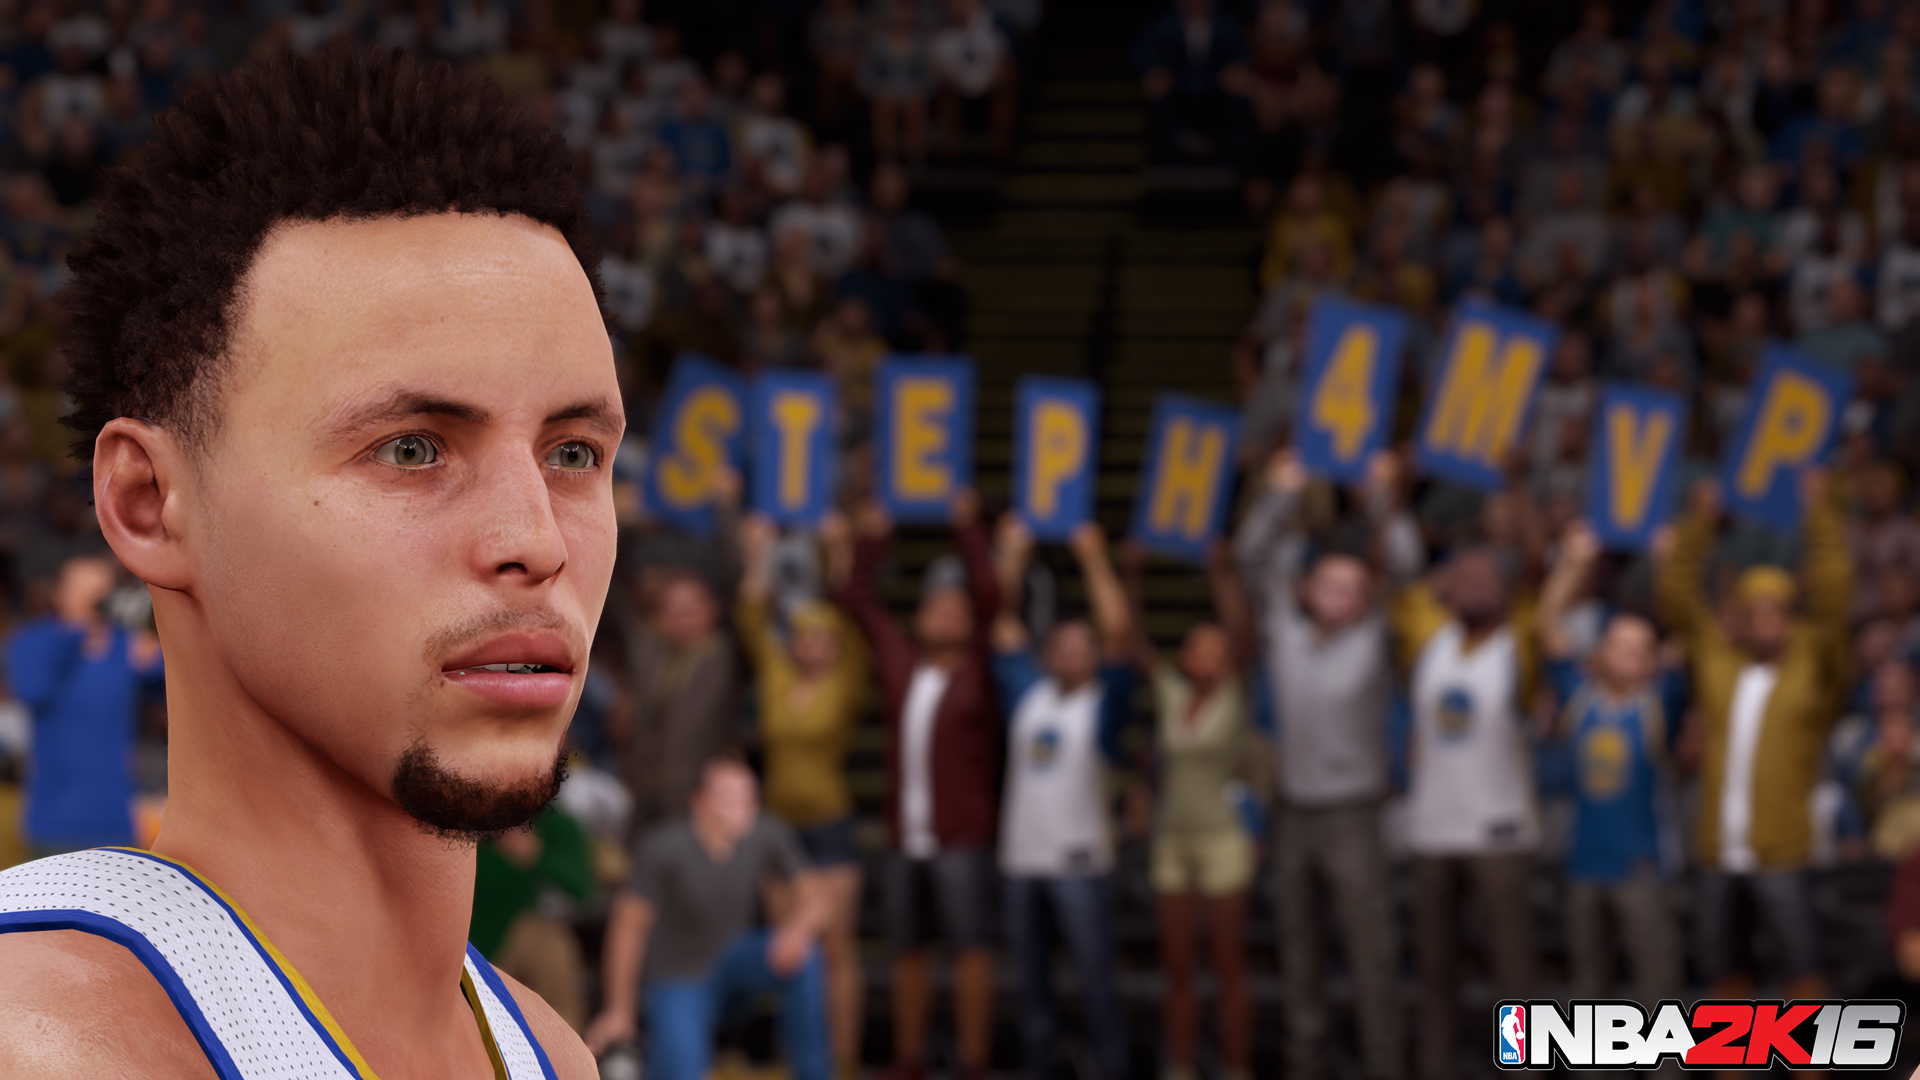 NBA 2k16 Steph Curry screenshot